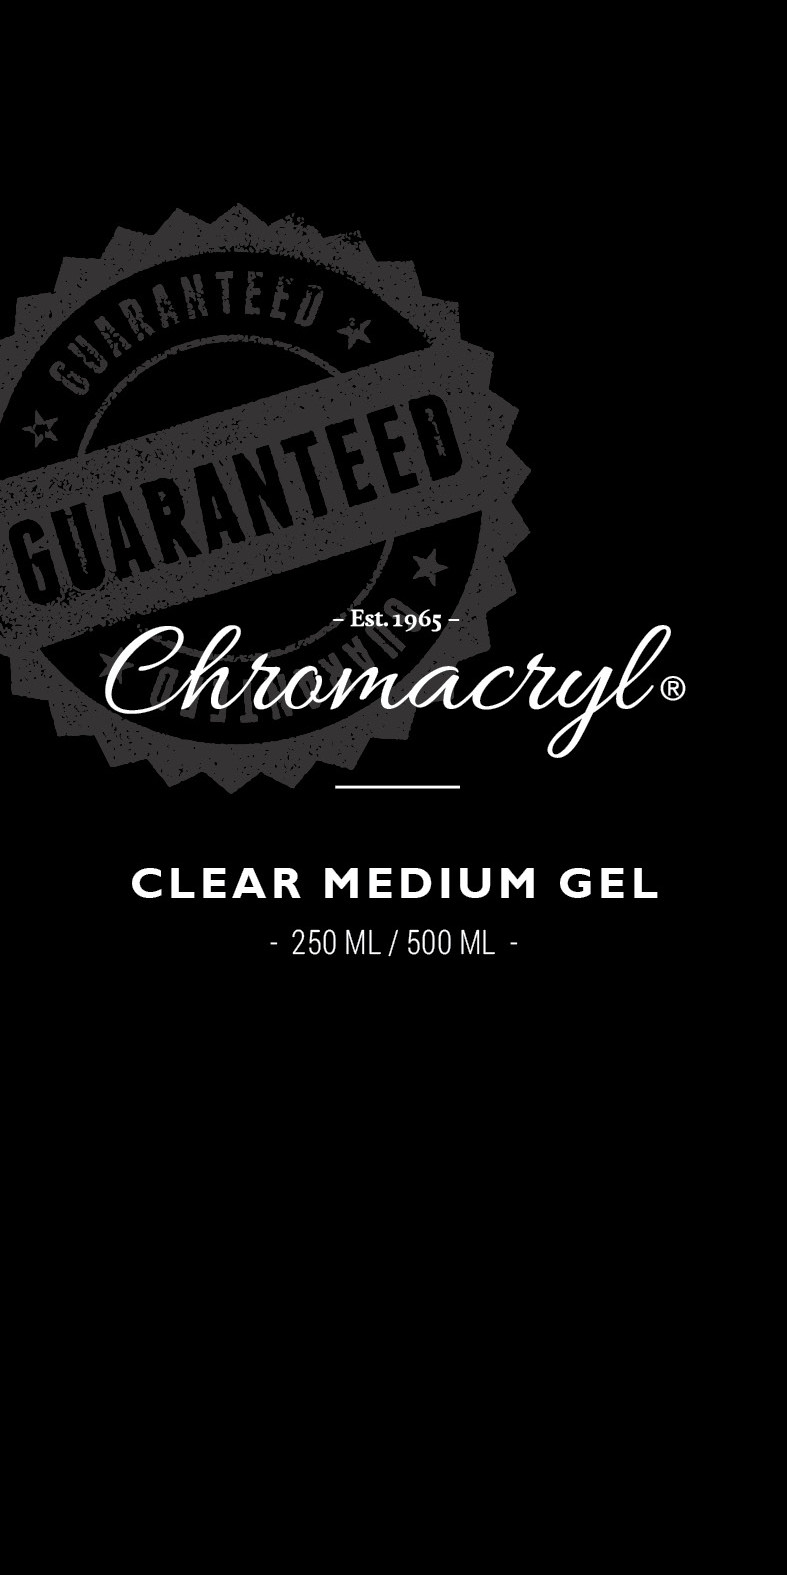 Chromacryl: Clear Medium Gel